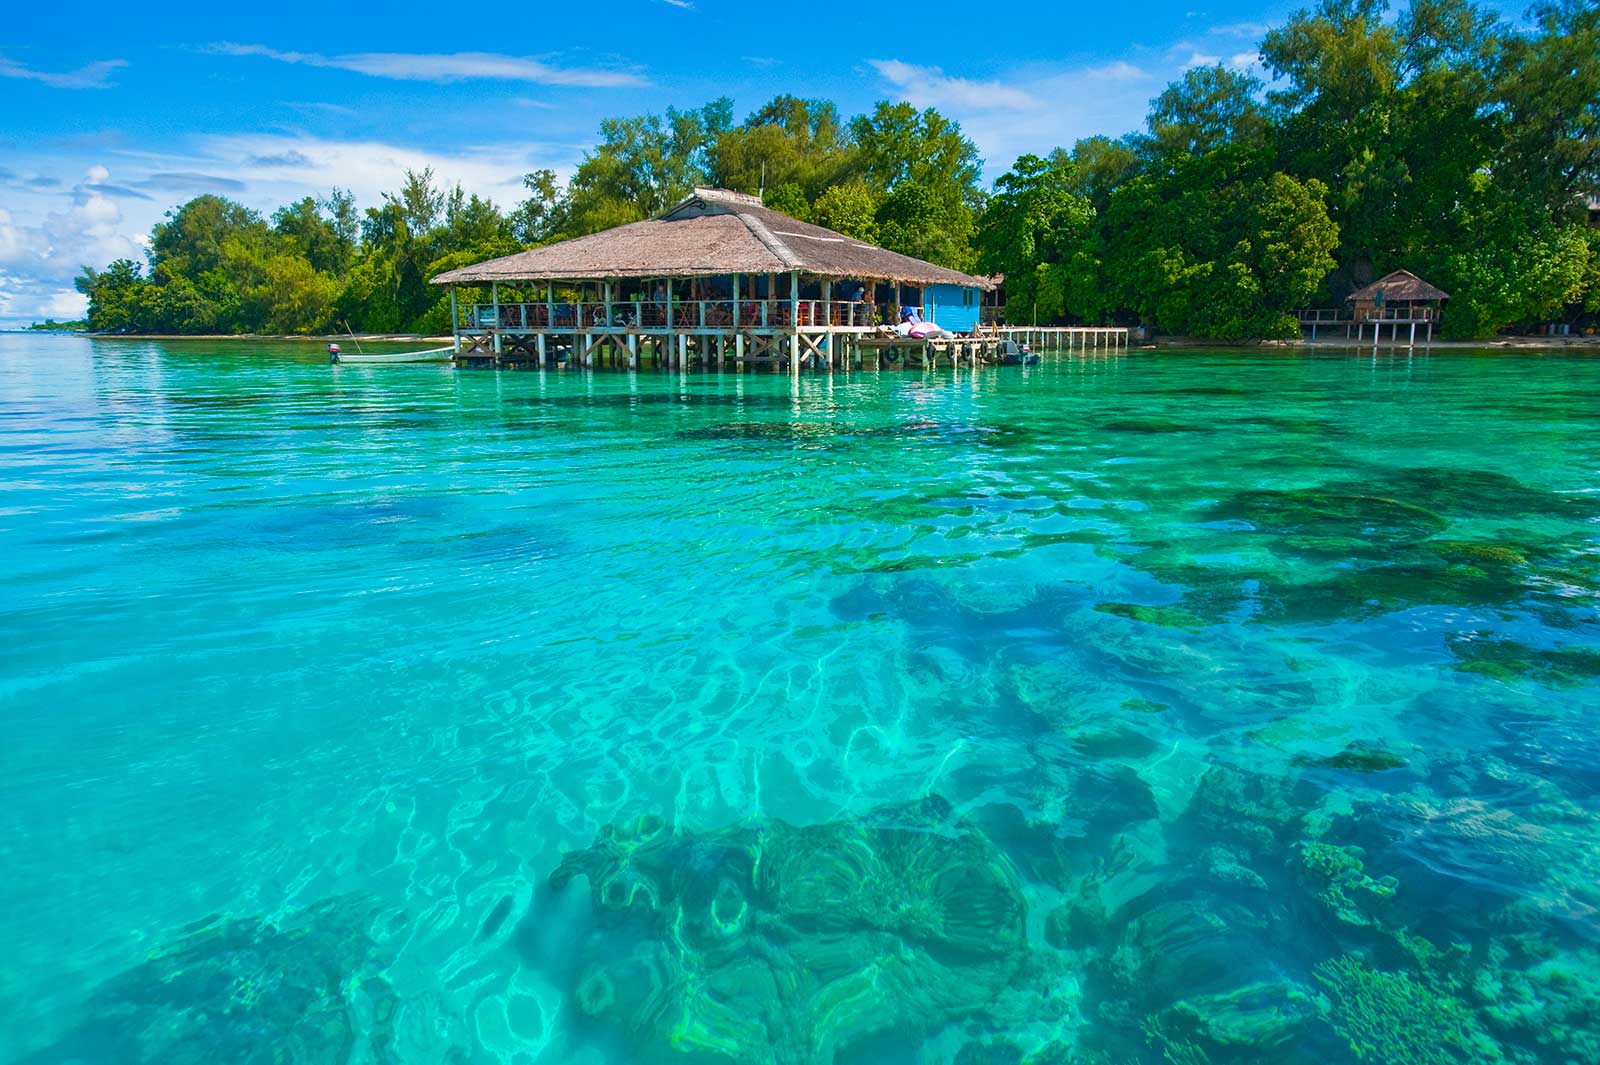 Fatboys resort near Gizo, Solomon Islands